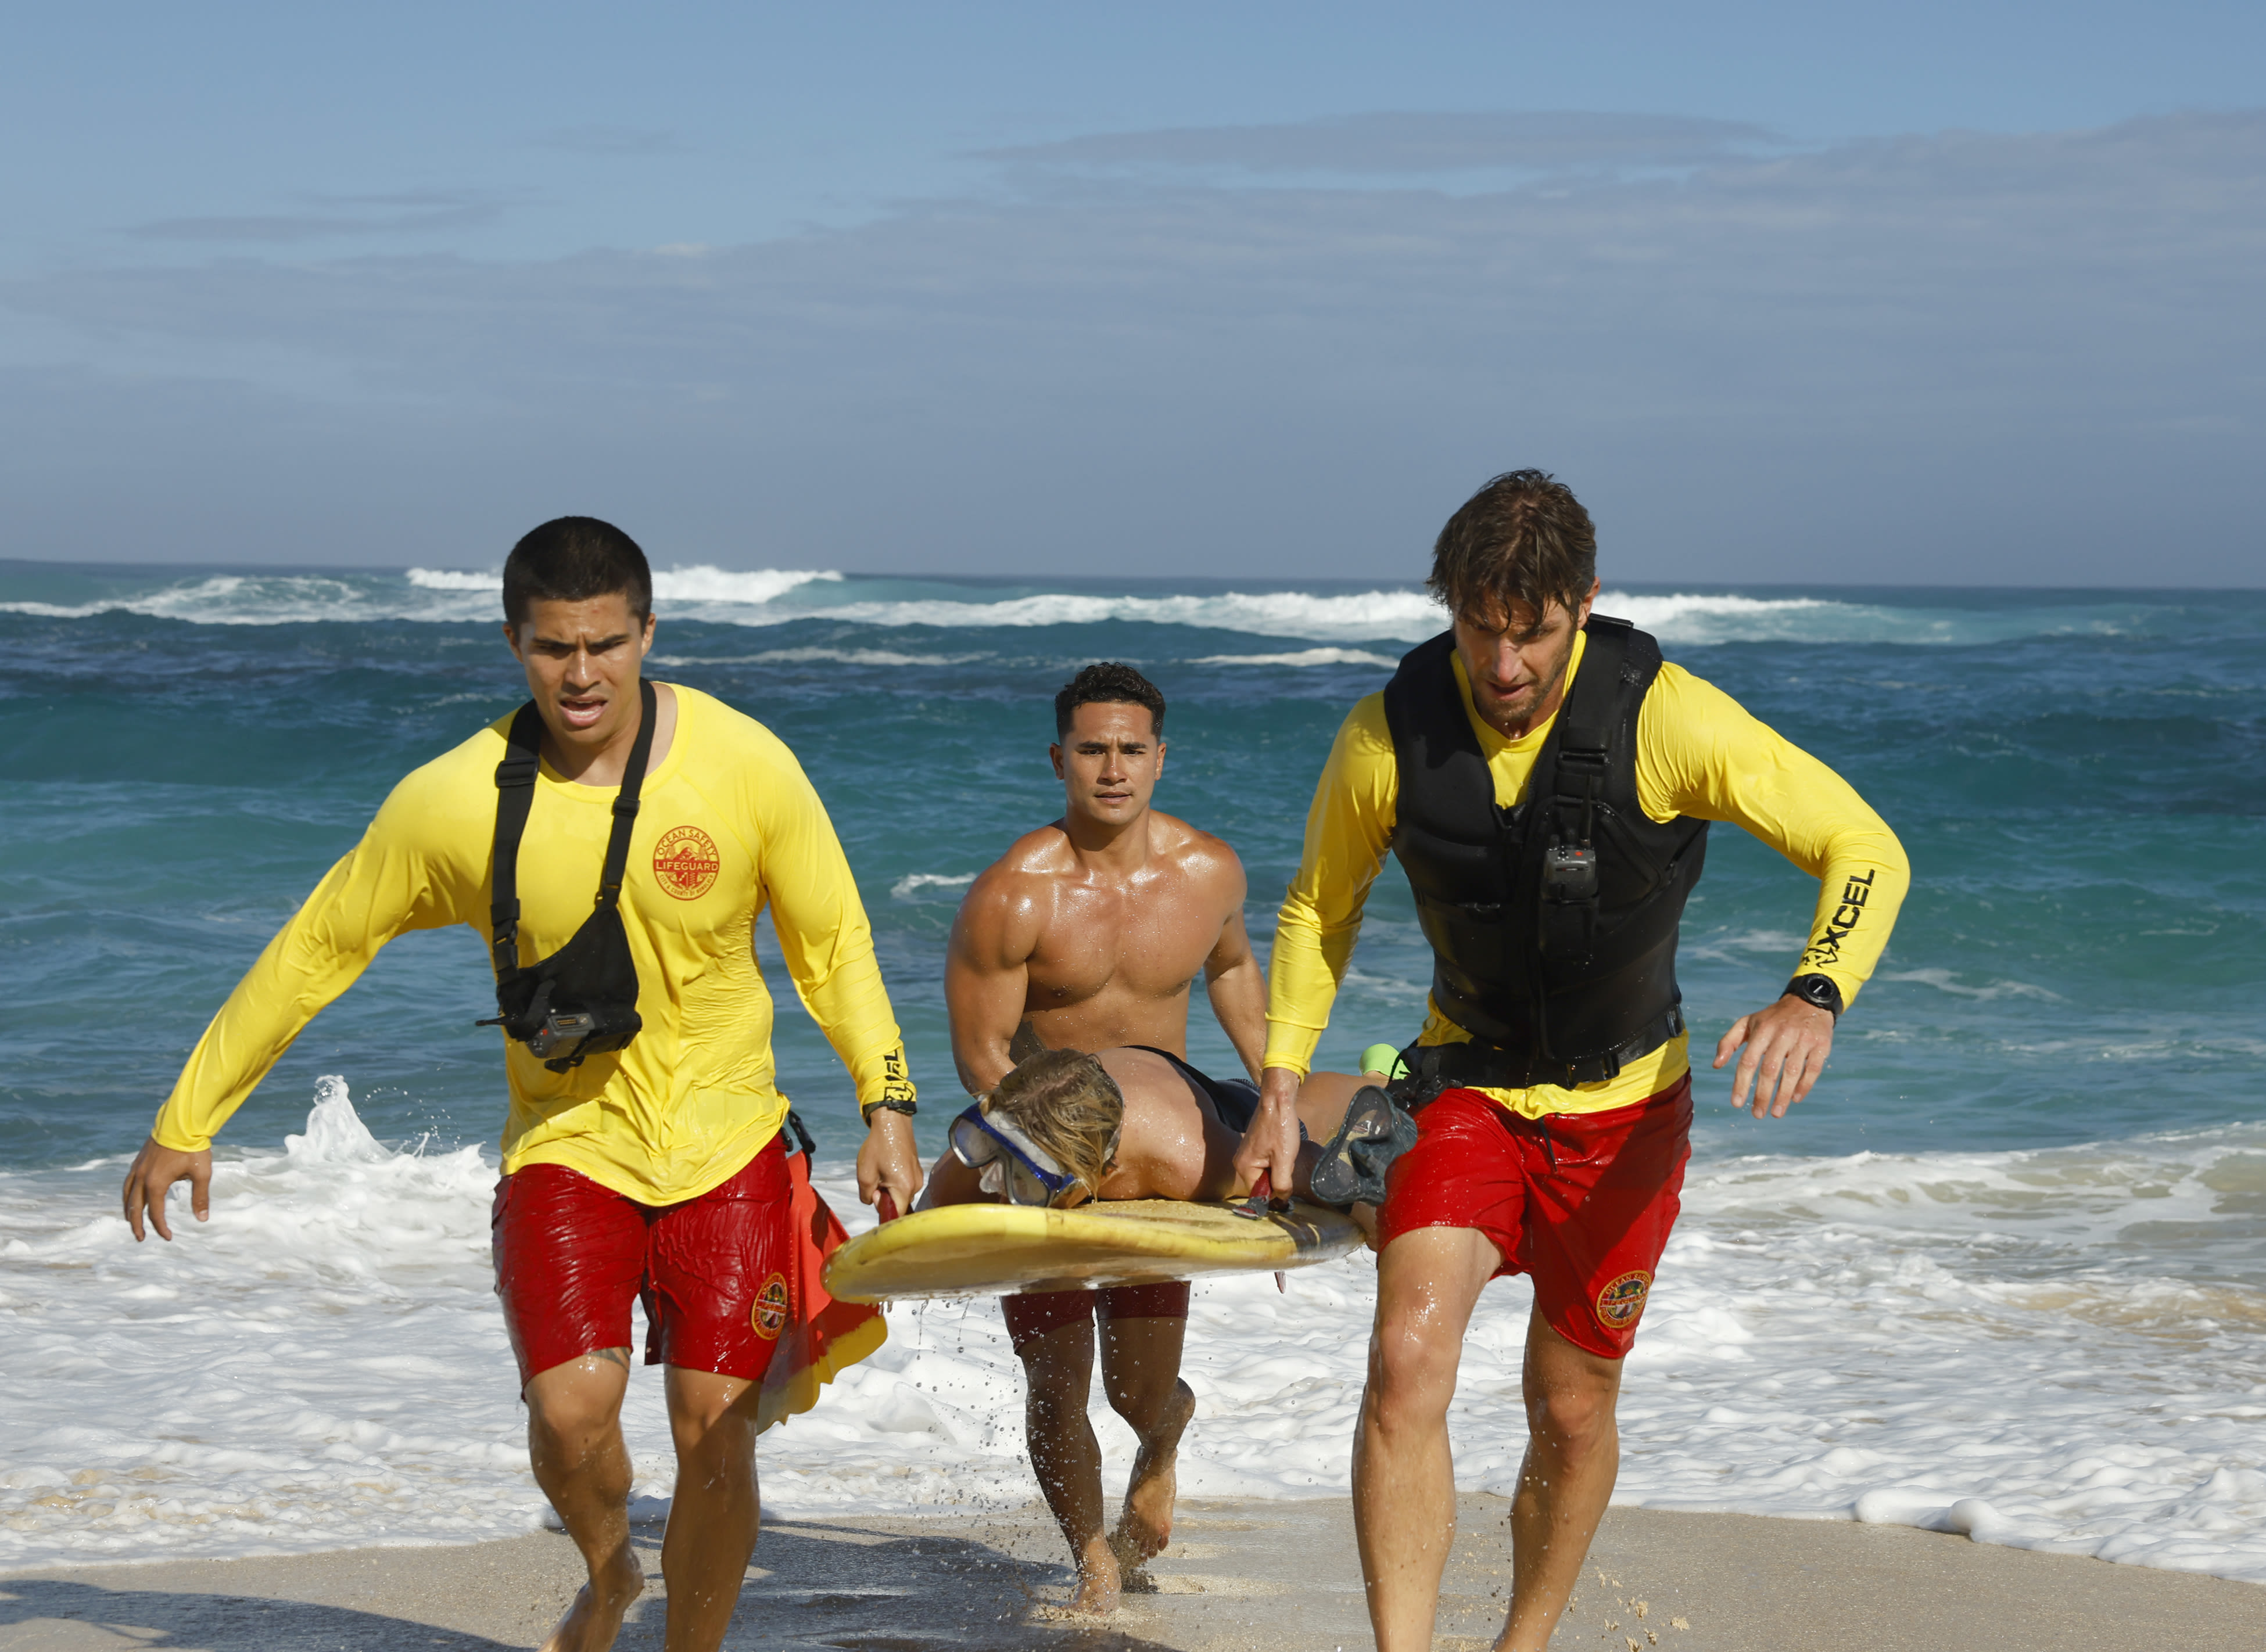 New Lifeguard Drama ‘Rescue HI-Surf’ Lands Fox’s Coveted Post-Super Bowl LIX Timeslot